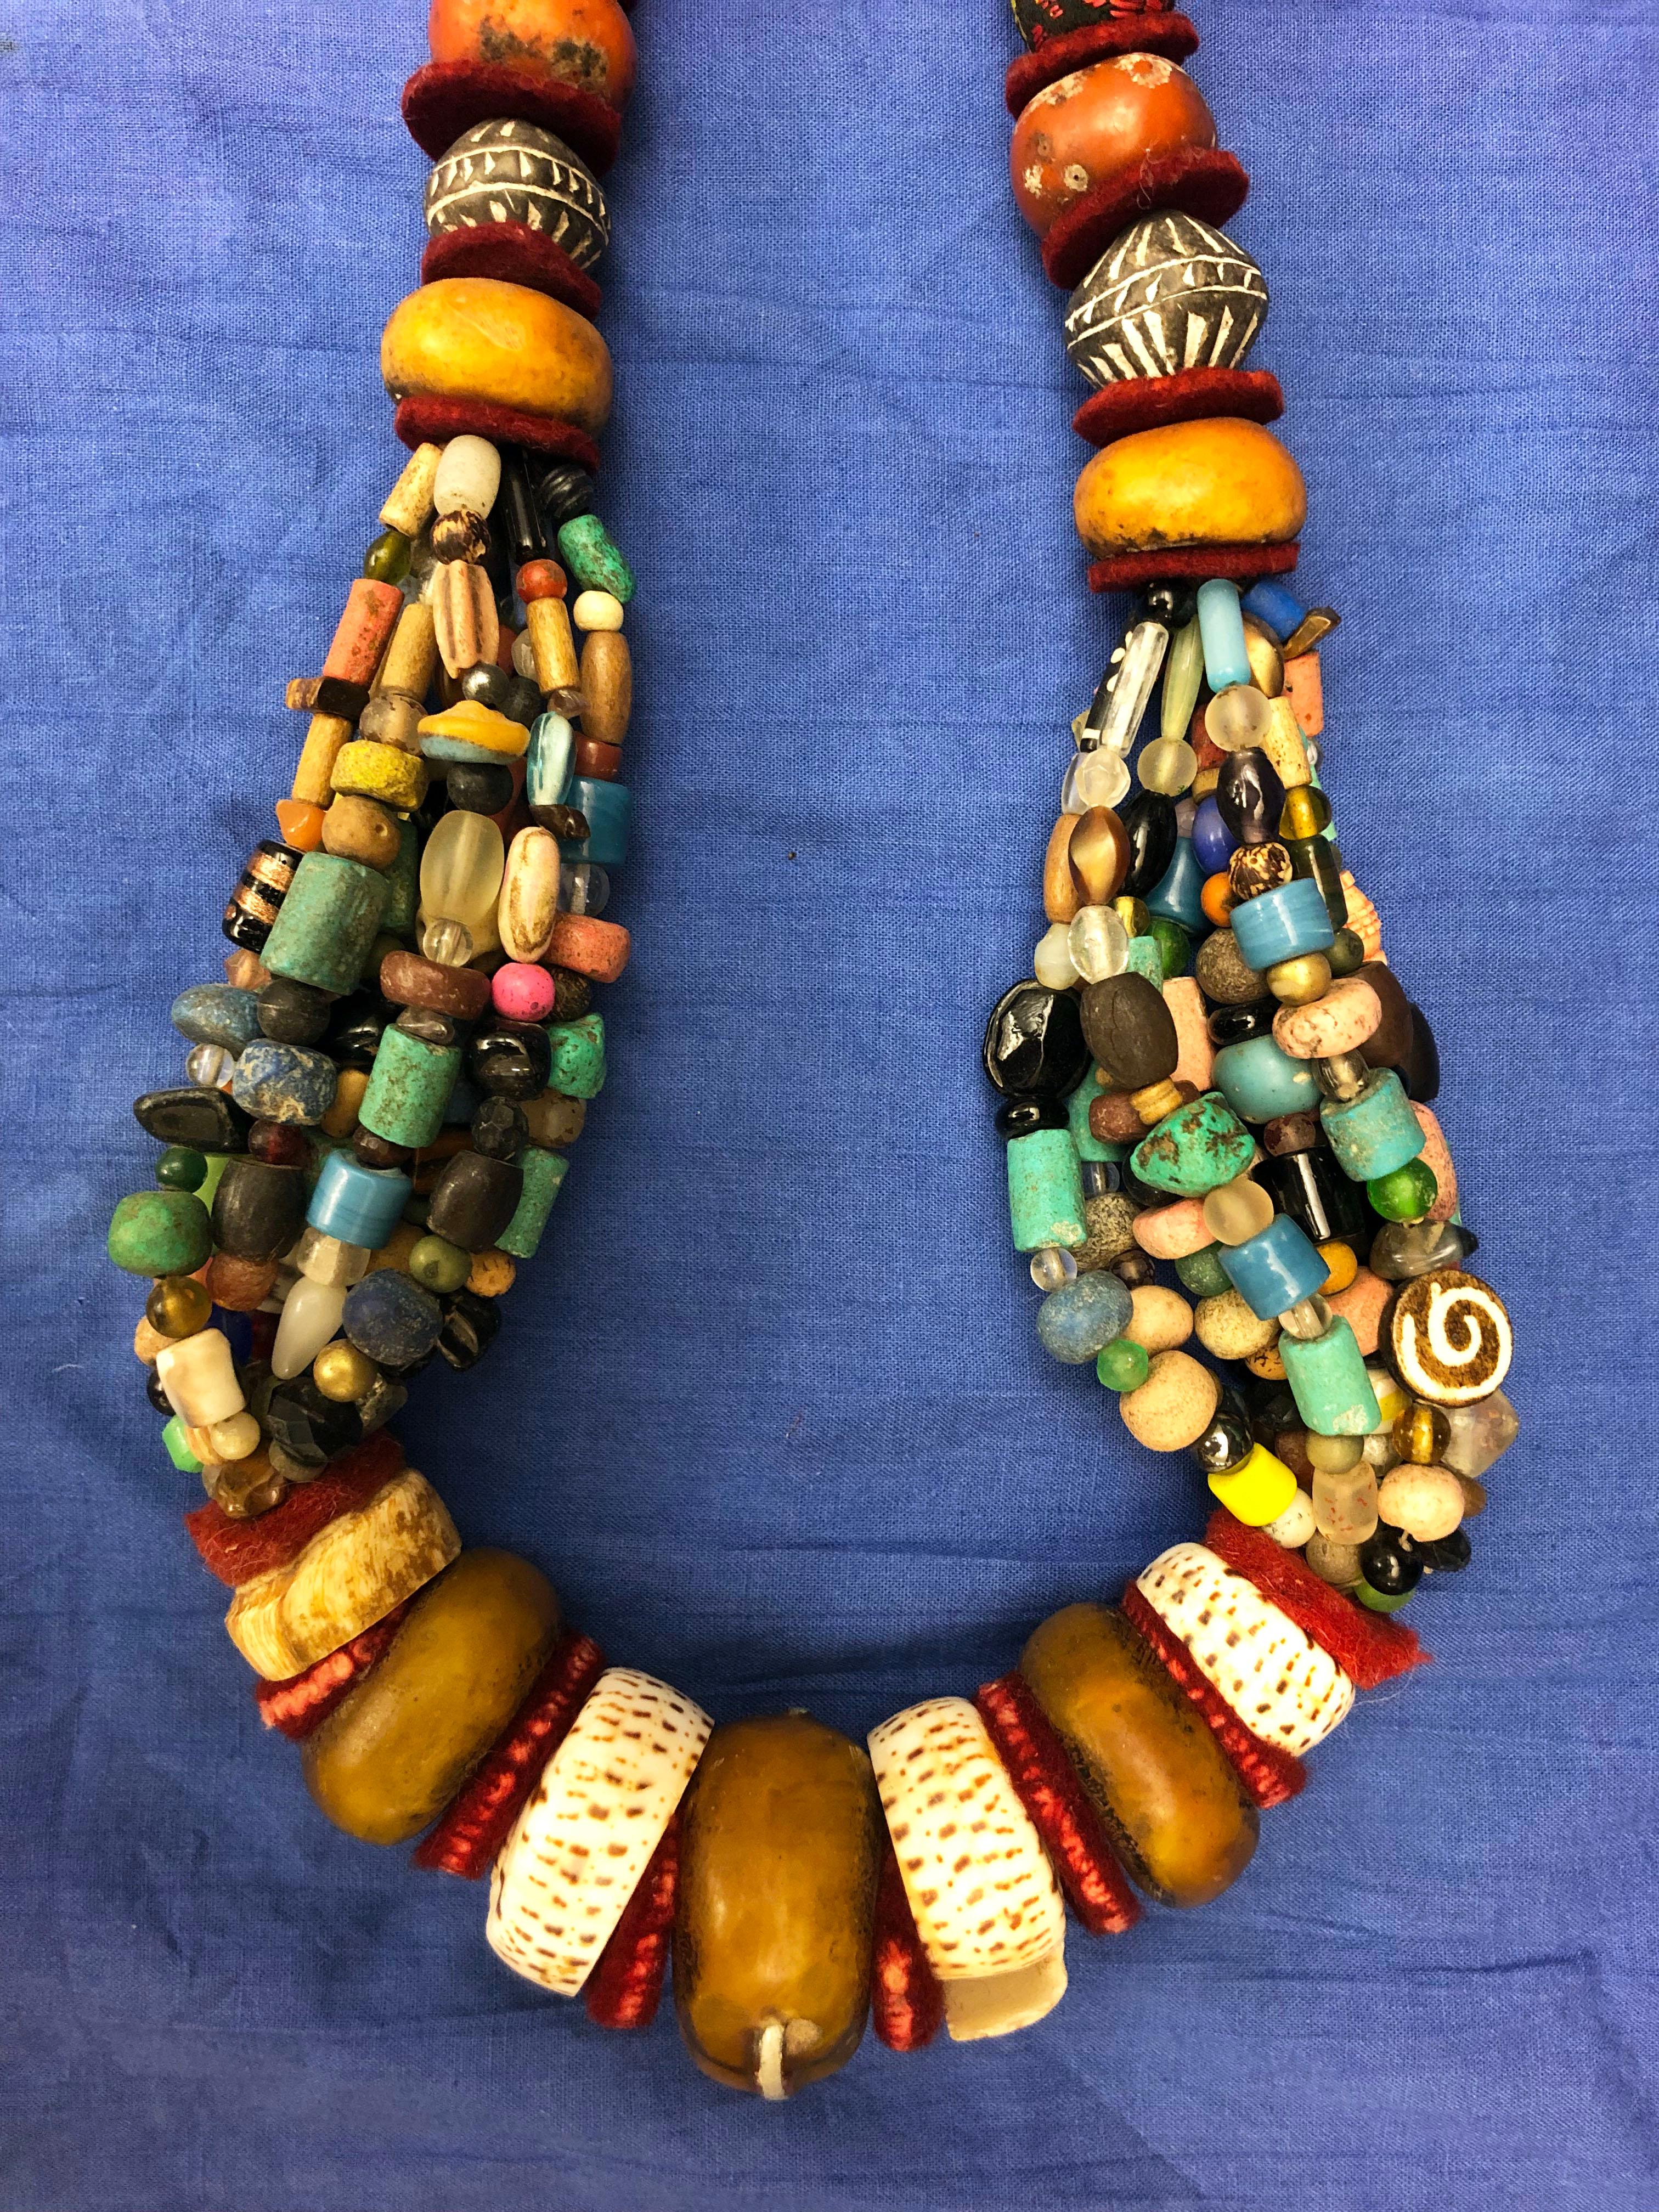 2 Berber Amber Necklace Moroccan Ethnic African Tribal Beads Handmade Jewlery 